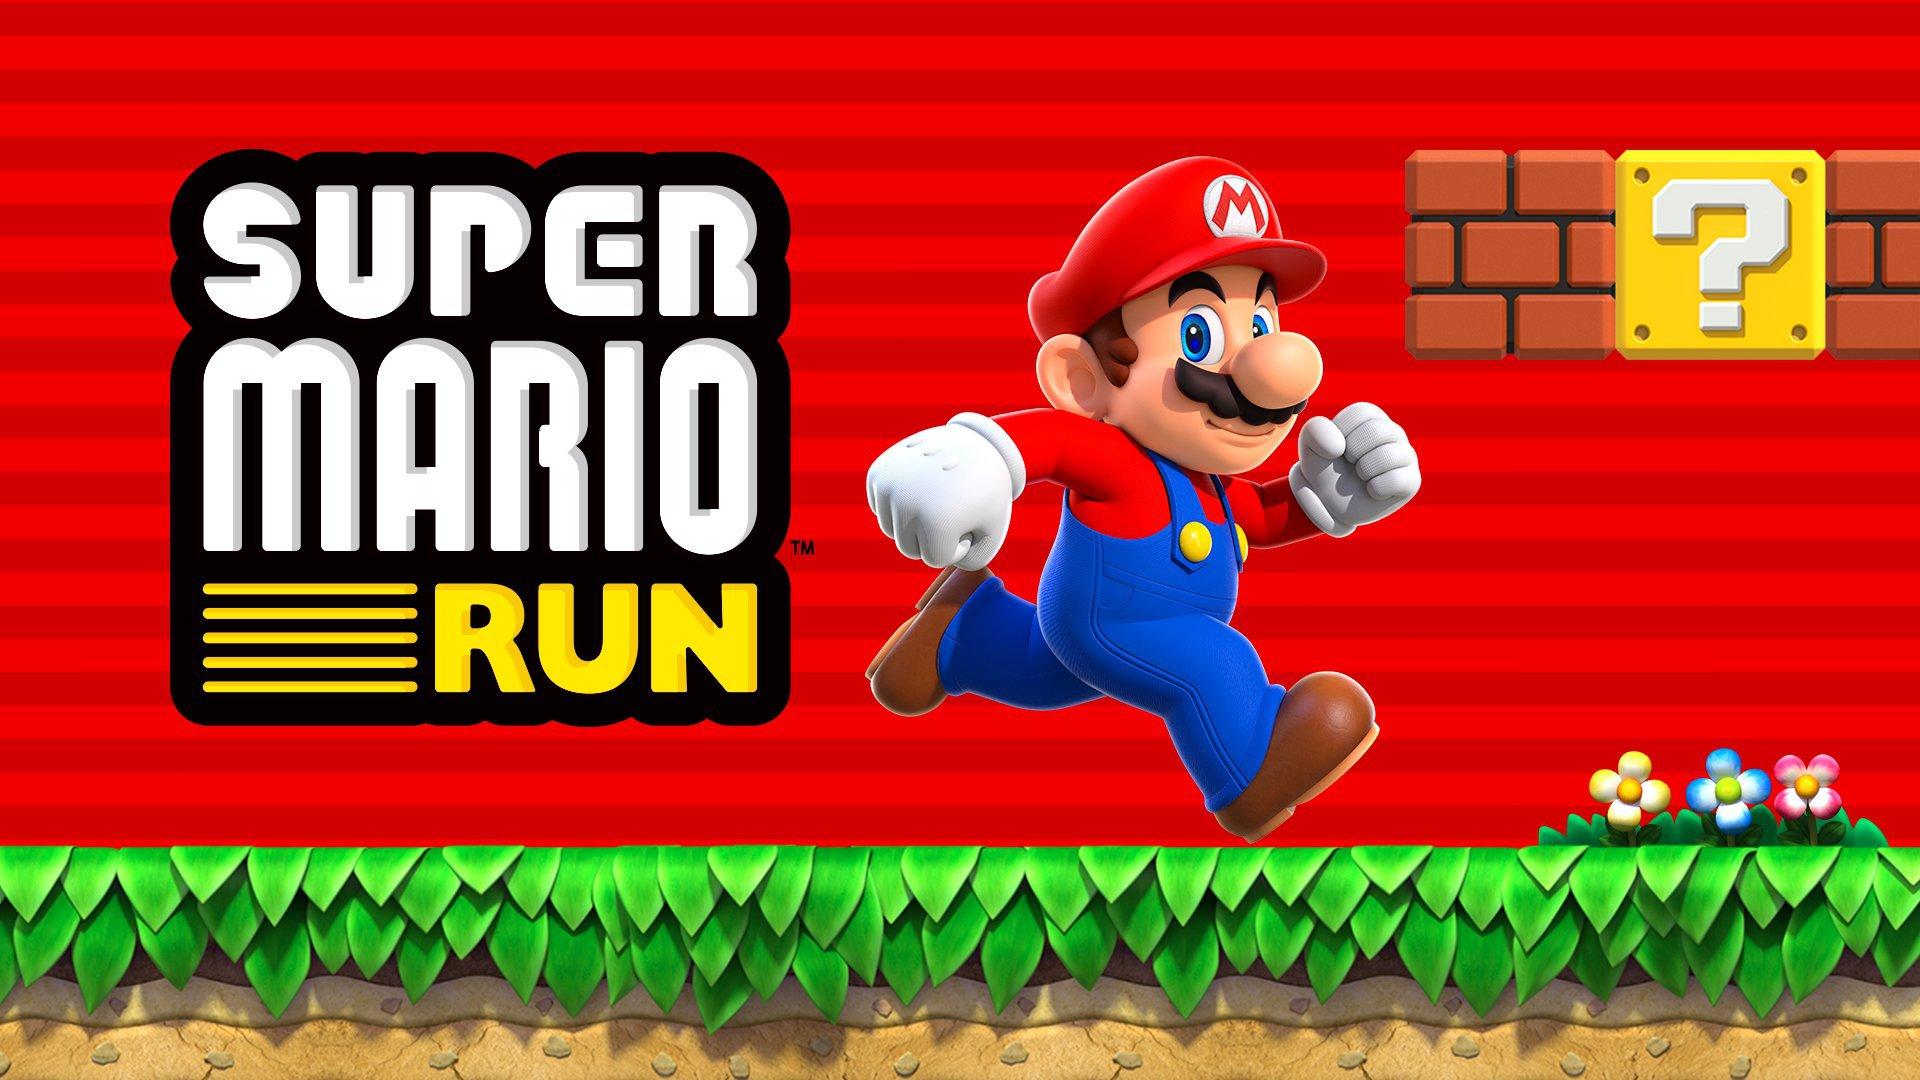 Super Mario Run debuta en iOS con la firme intención de superar a Pokémon Go